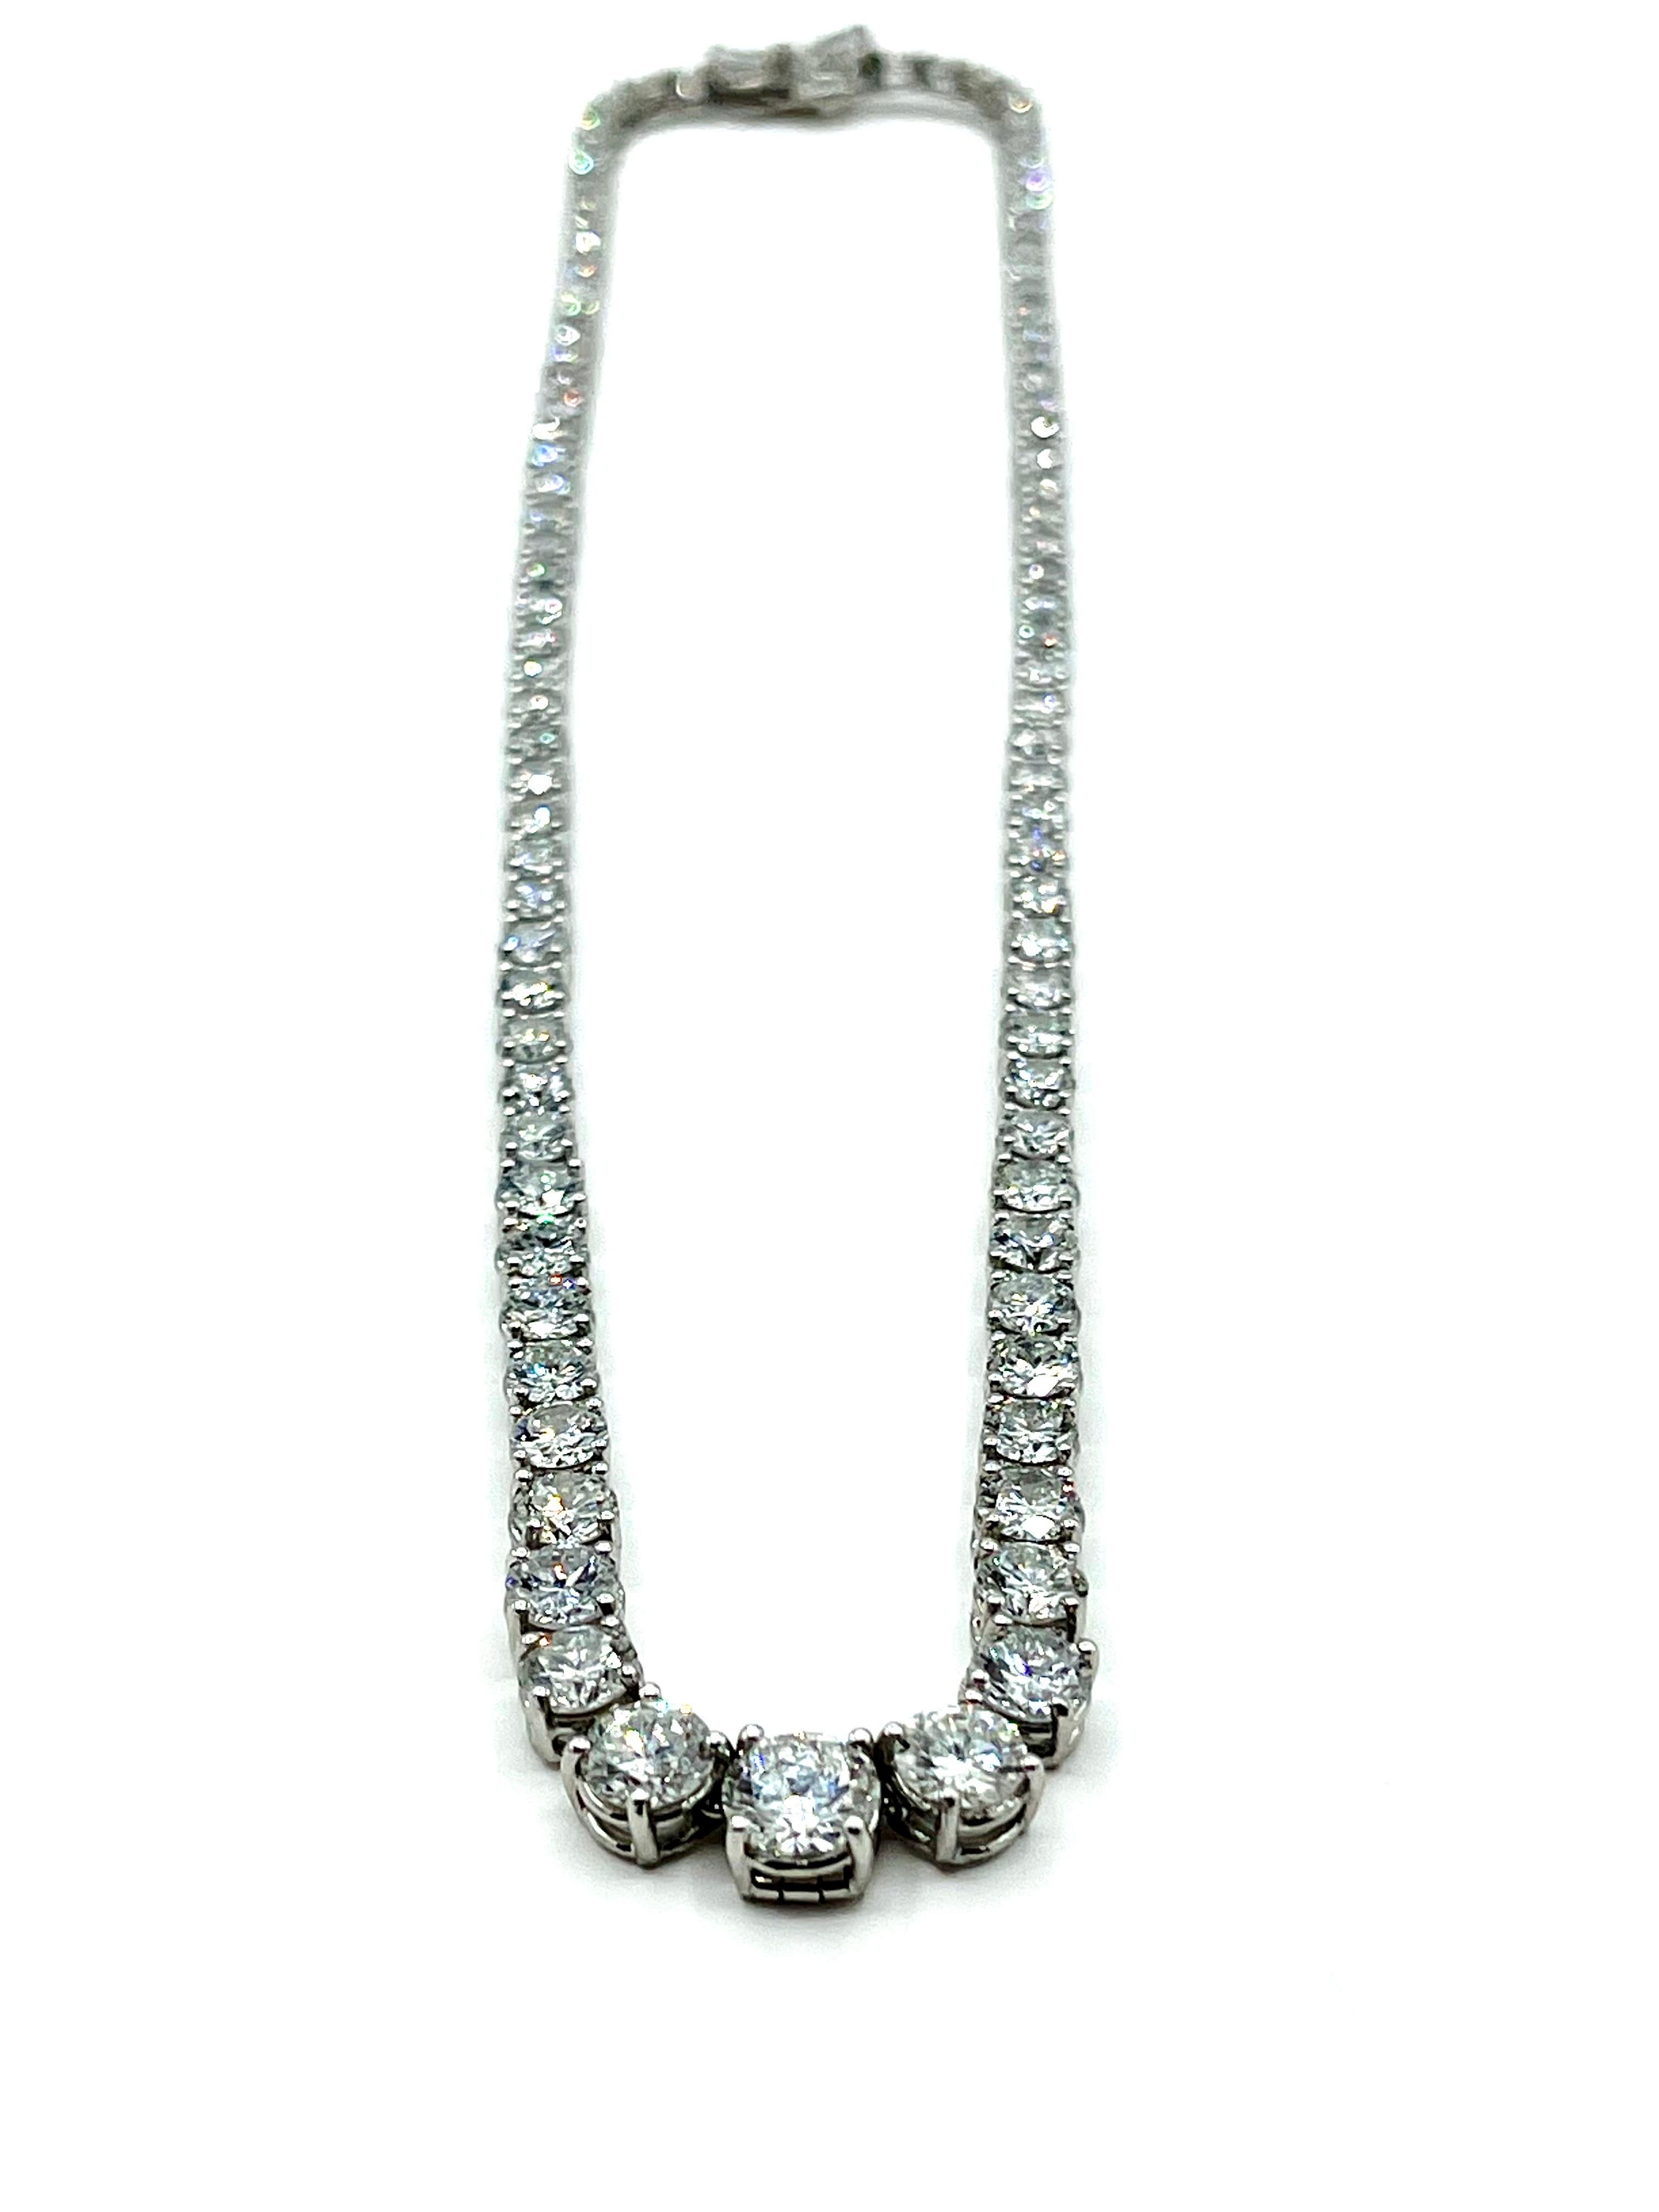 Modern 21.06 Carats Diamond Riviera Necklace in Platinum